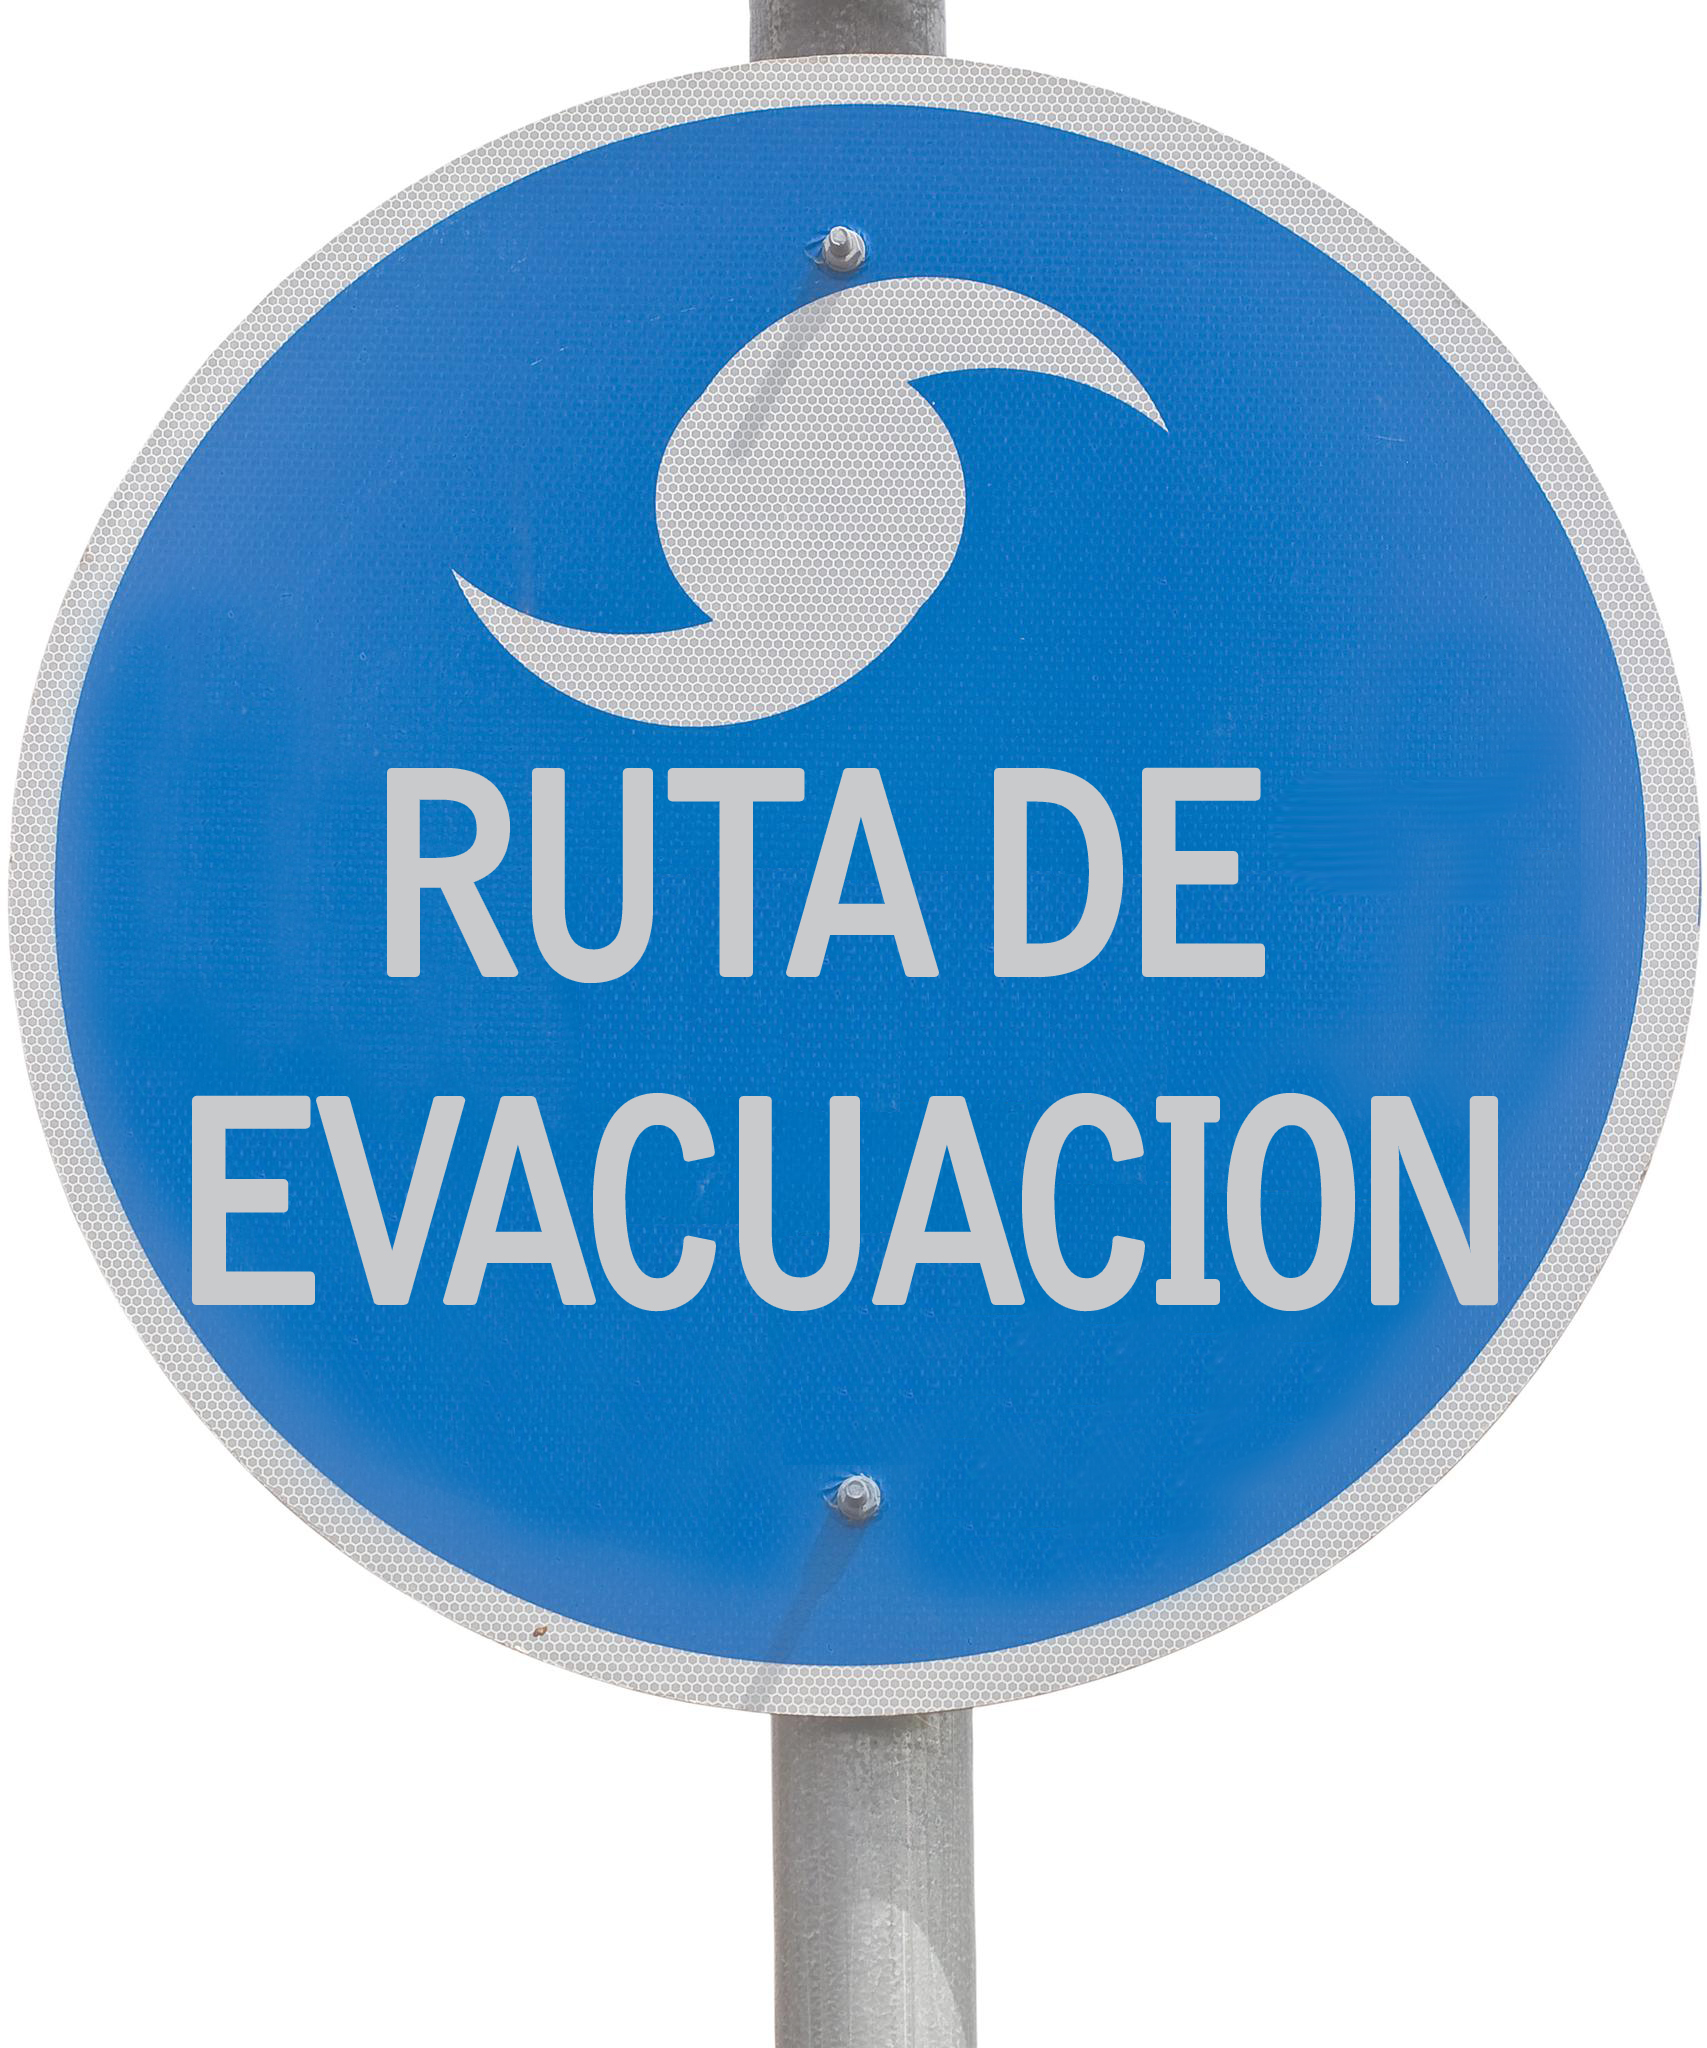 evac sign